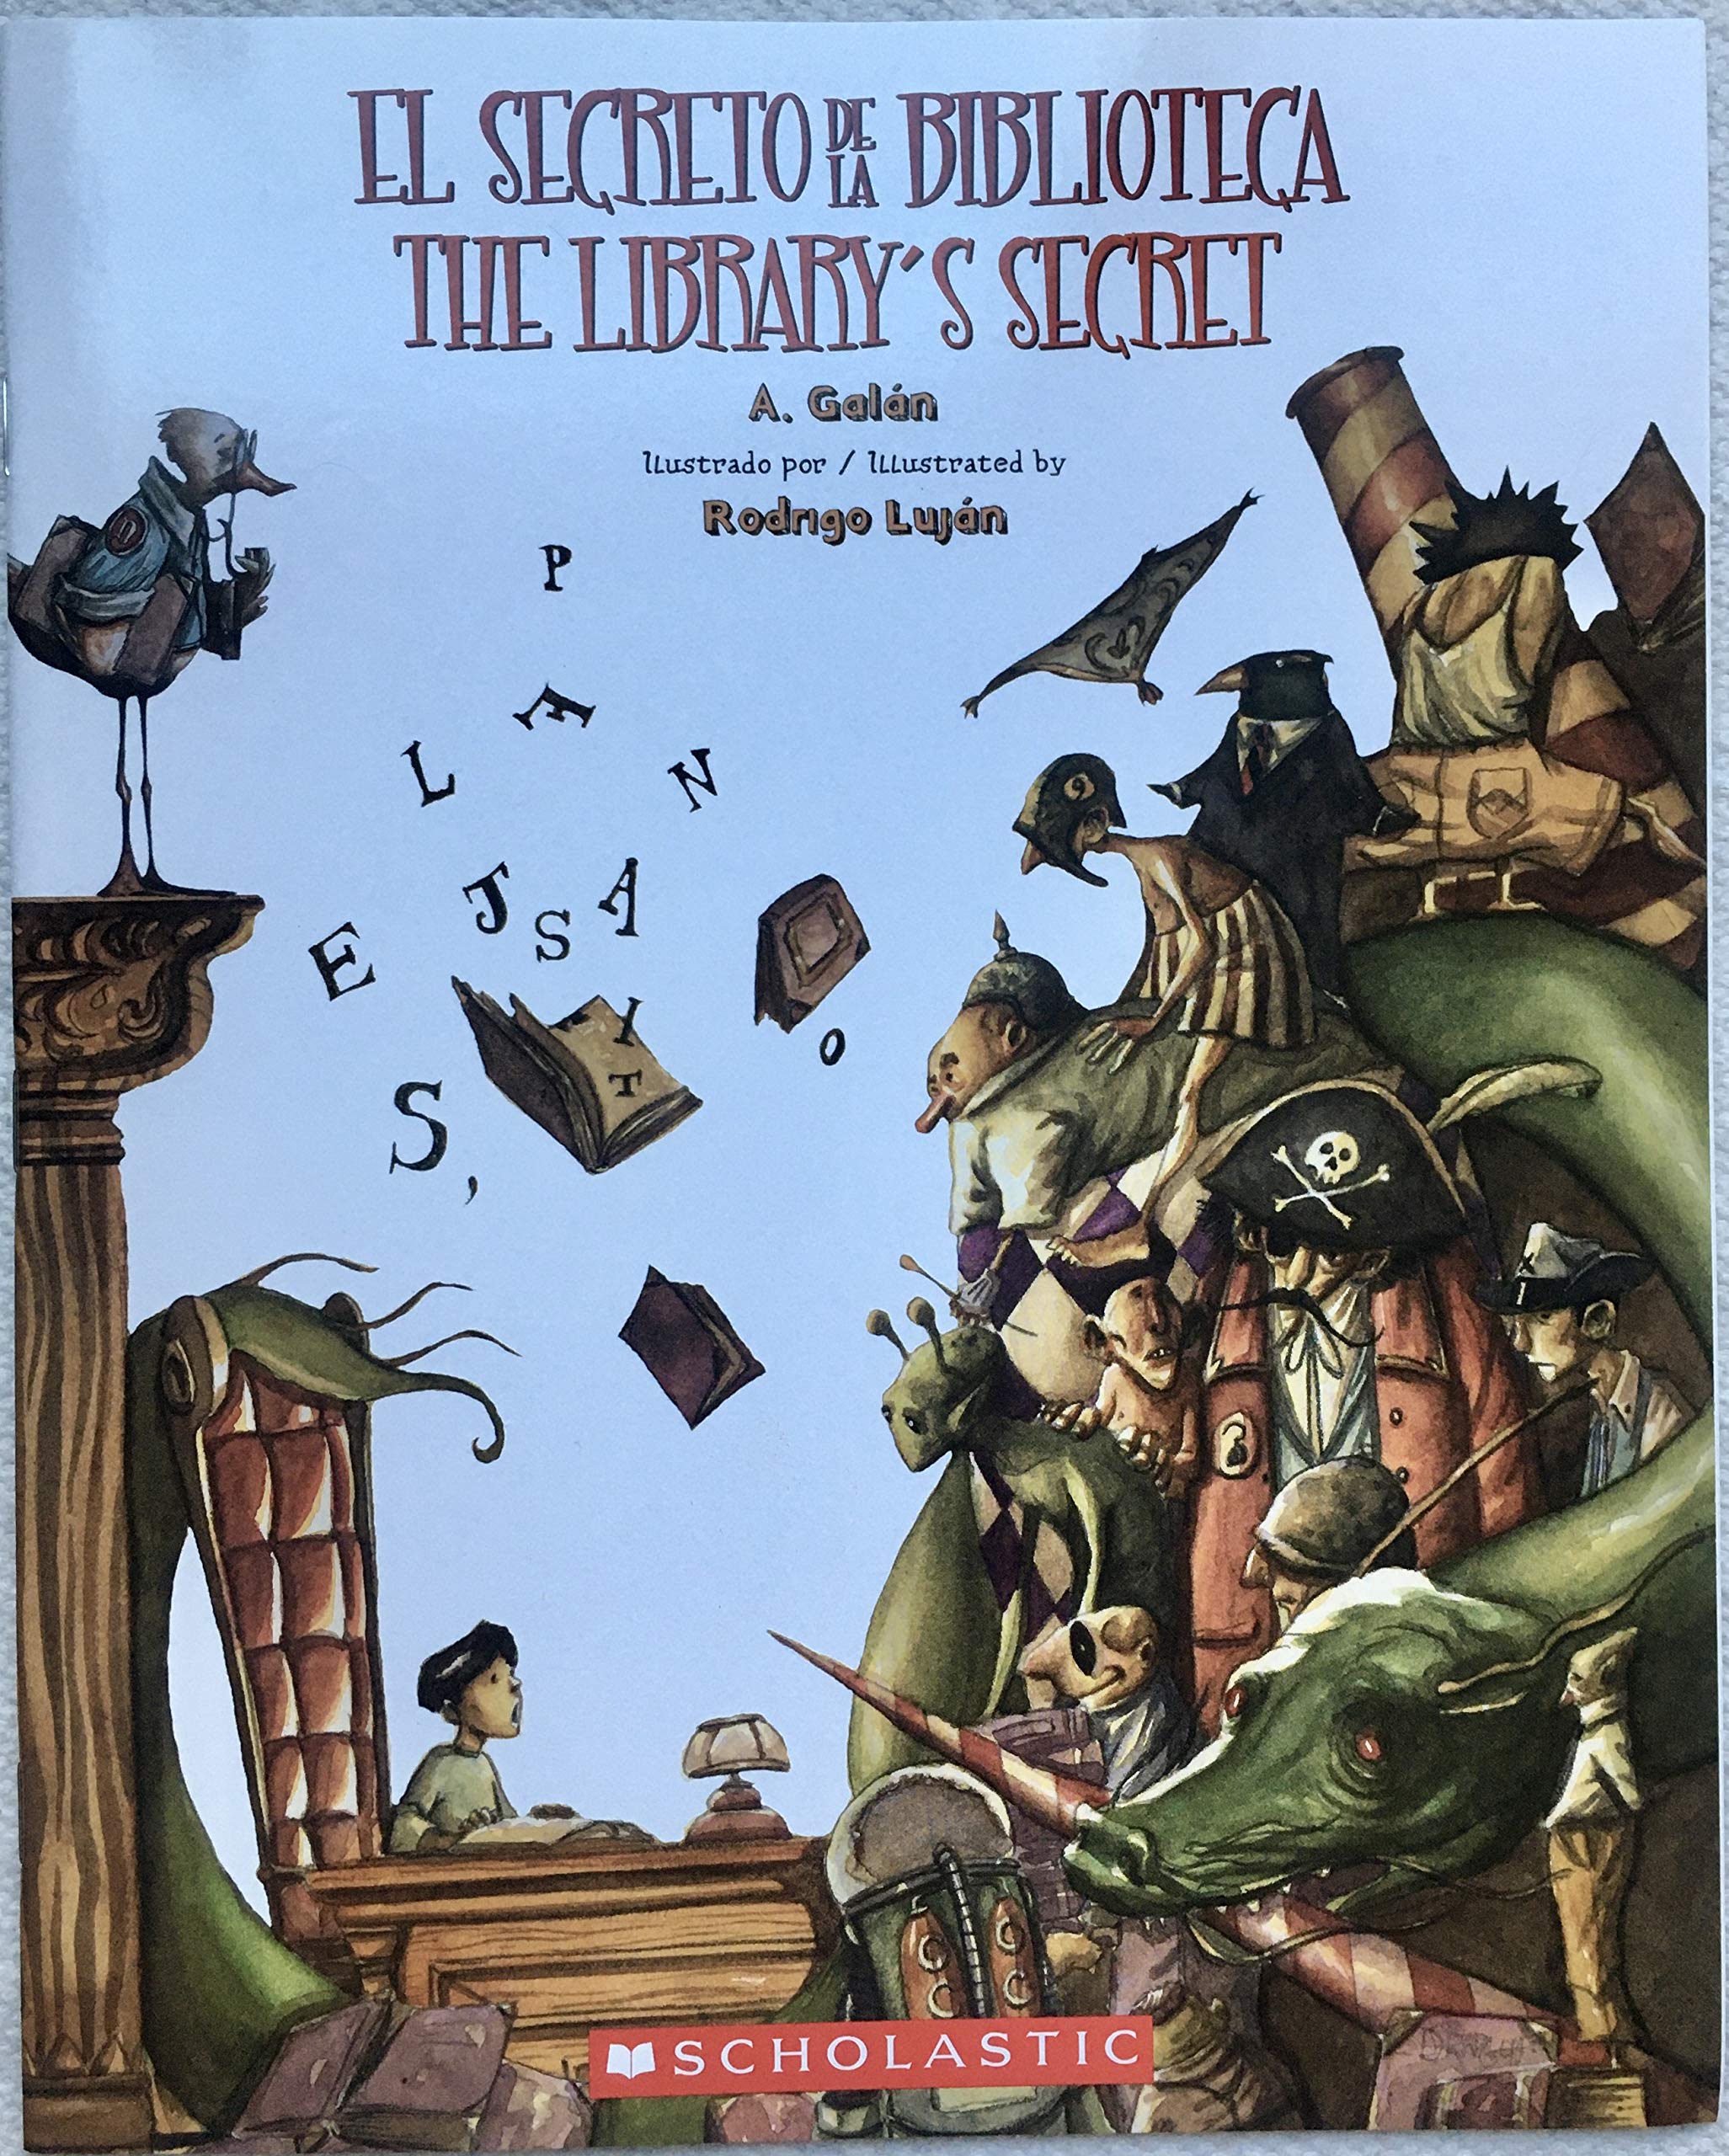 The Library’s Secret / El secreto de la biblioteca